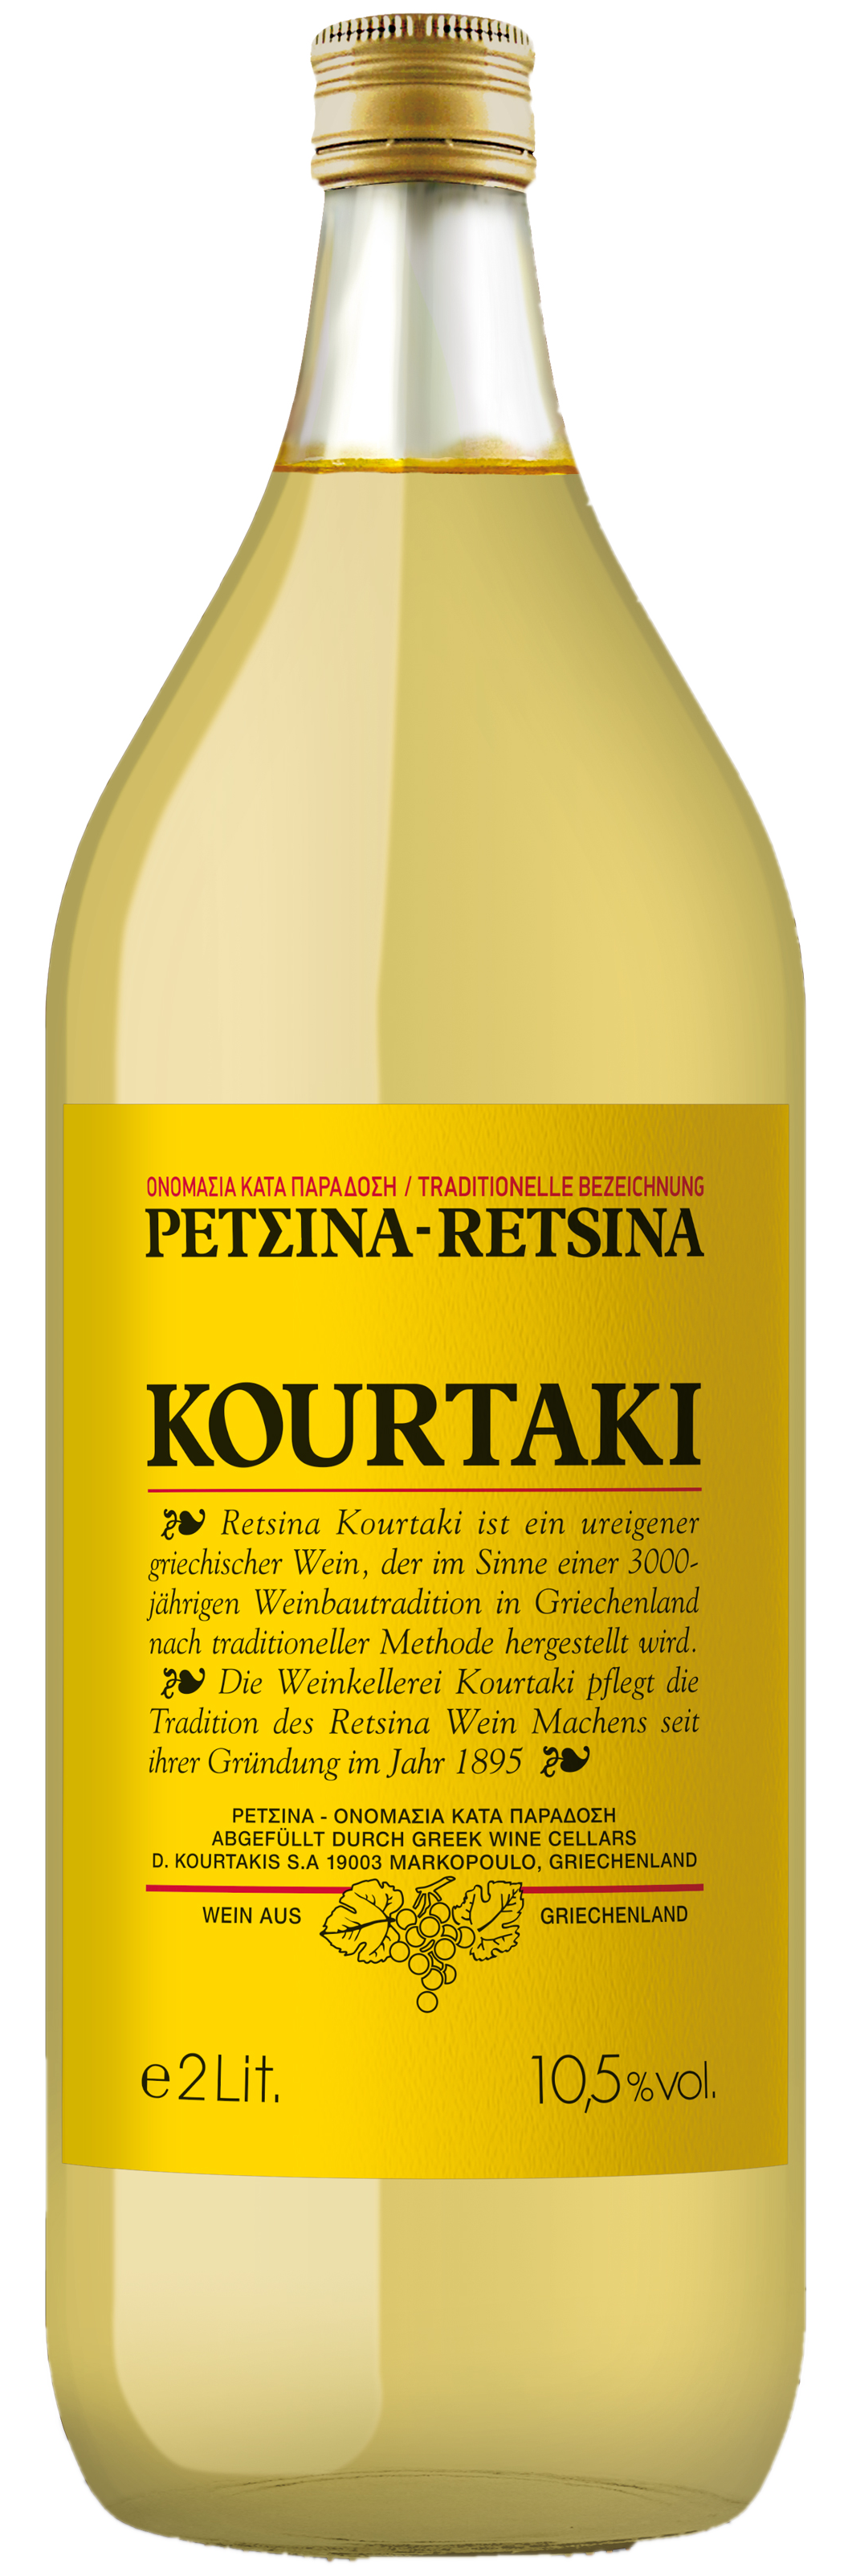 Kourtaki Retsina 2L | Weinversand Shop-Kreta ~ Ouzo, Metaxa, Weine, Olivenöl